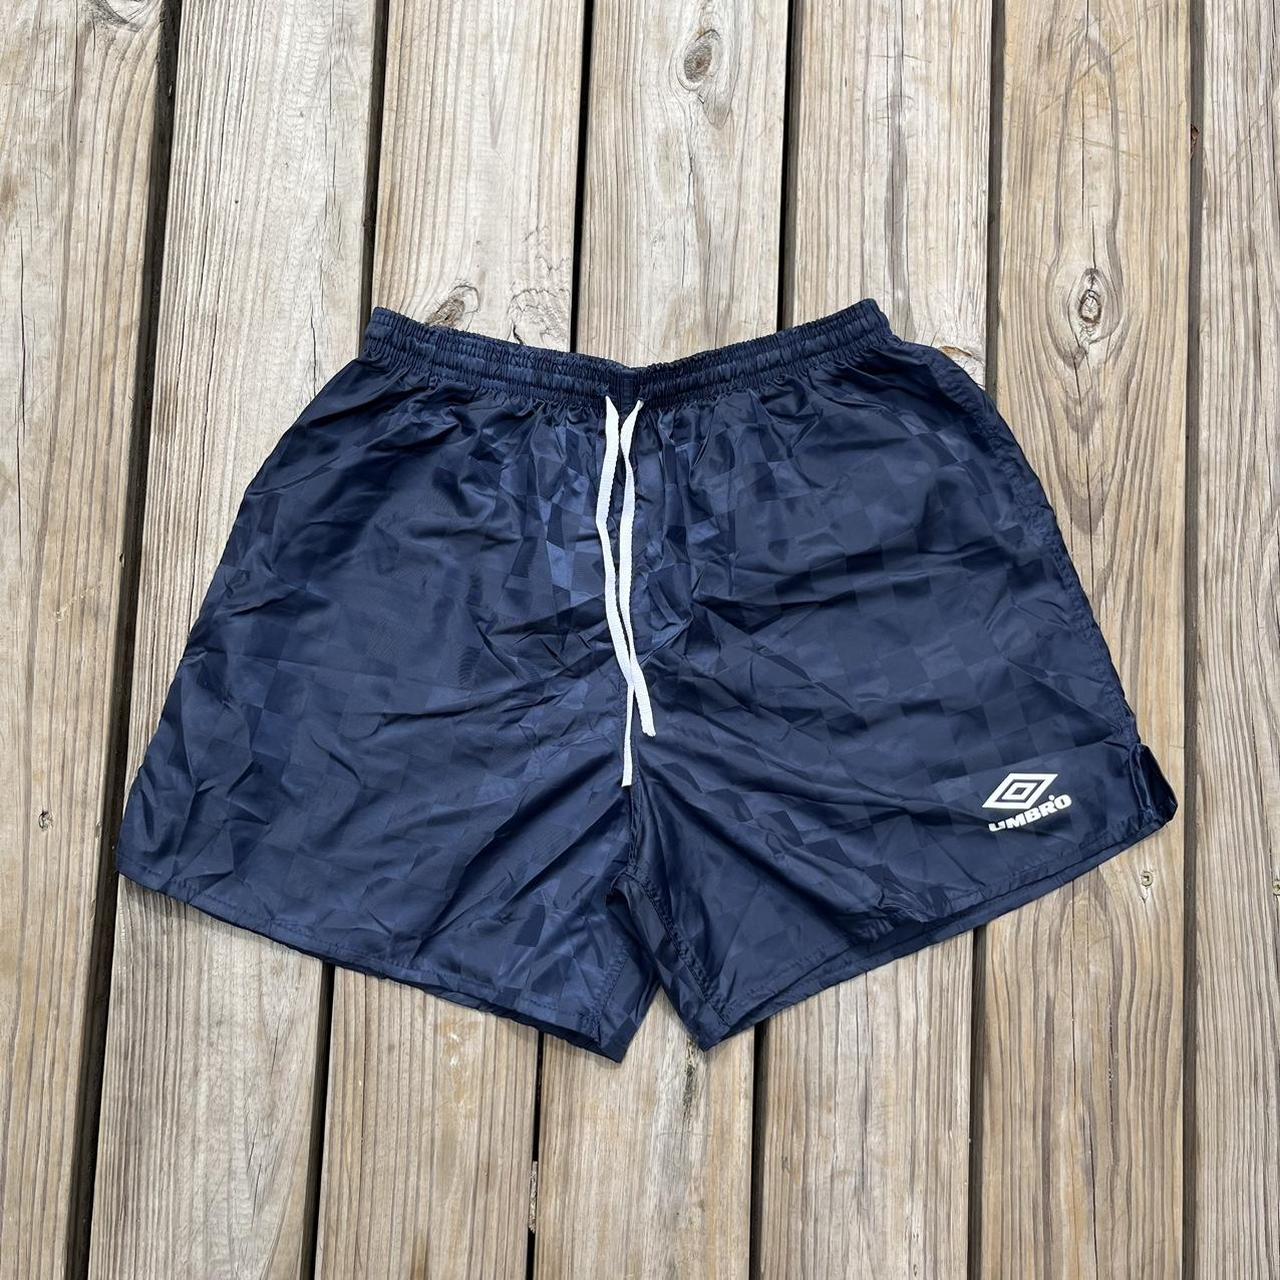 Vintage 90's Umbro checkered soccer shorts navy blue... - Depop